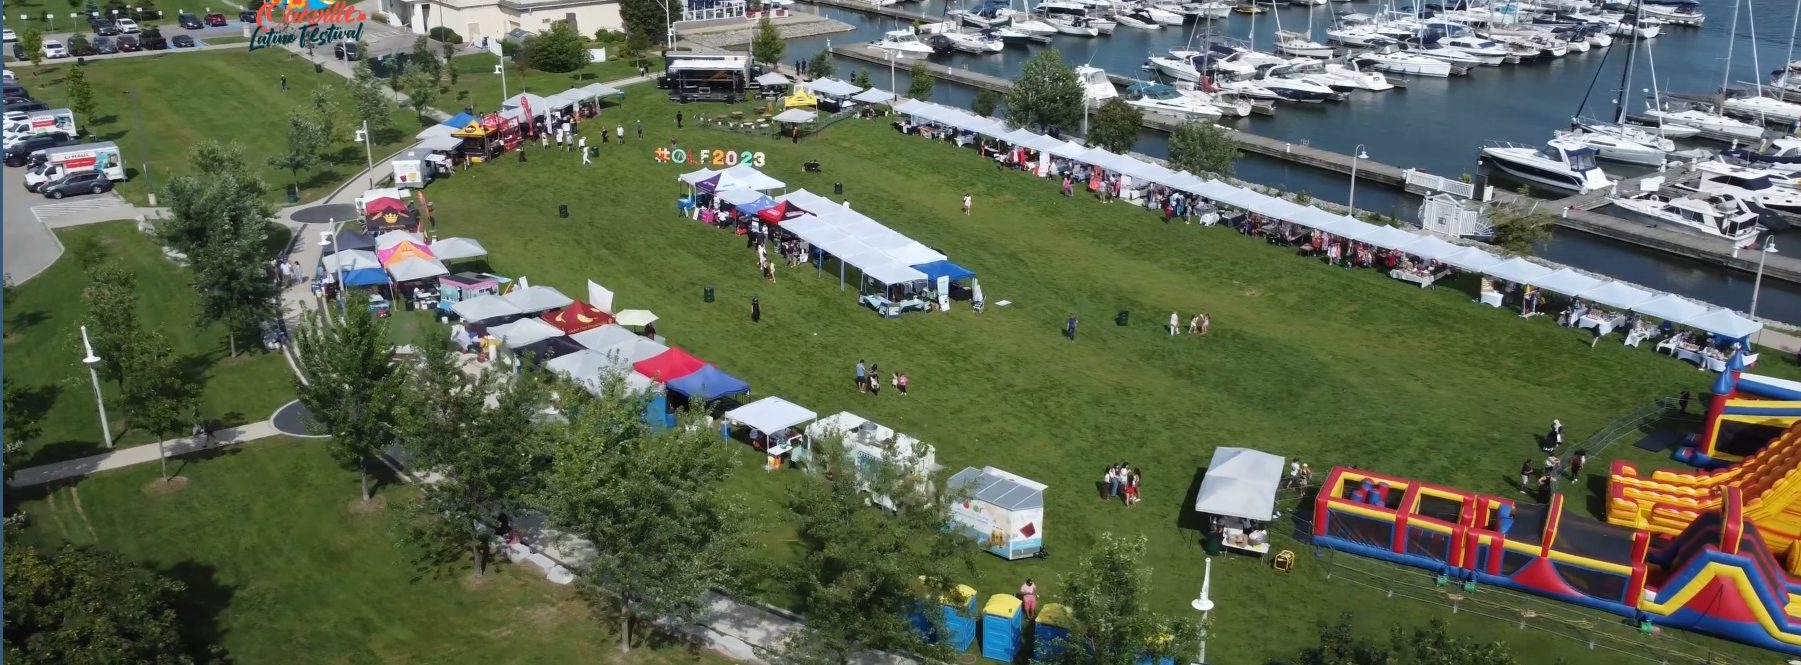 Ontario, Oakville, Latino festival, Bronte Heritage Waterfront Park, vendors, performers, artisans